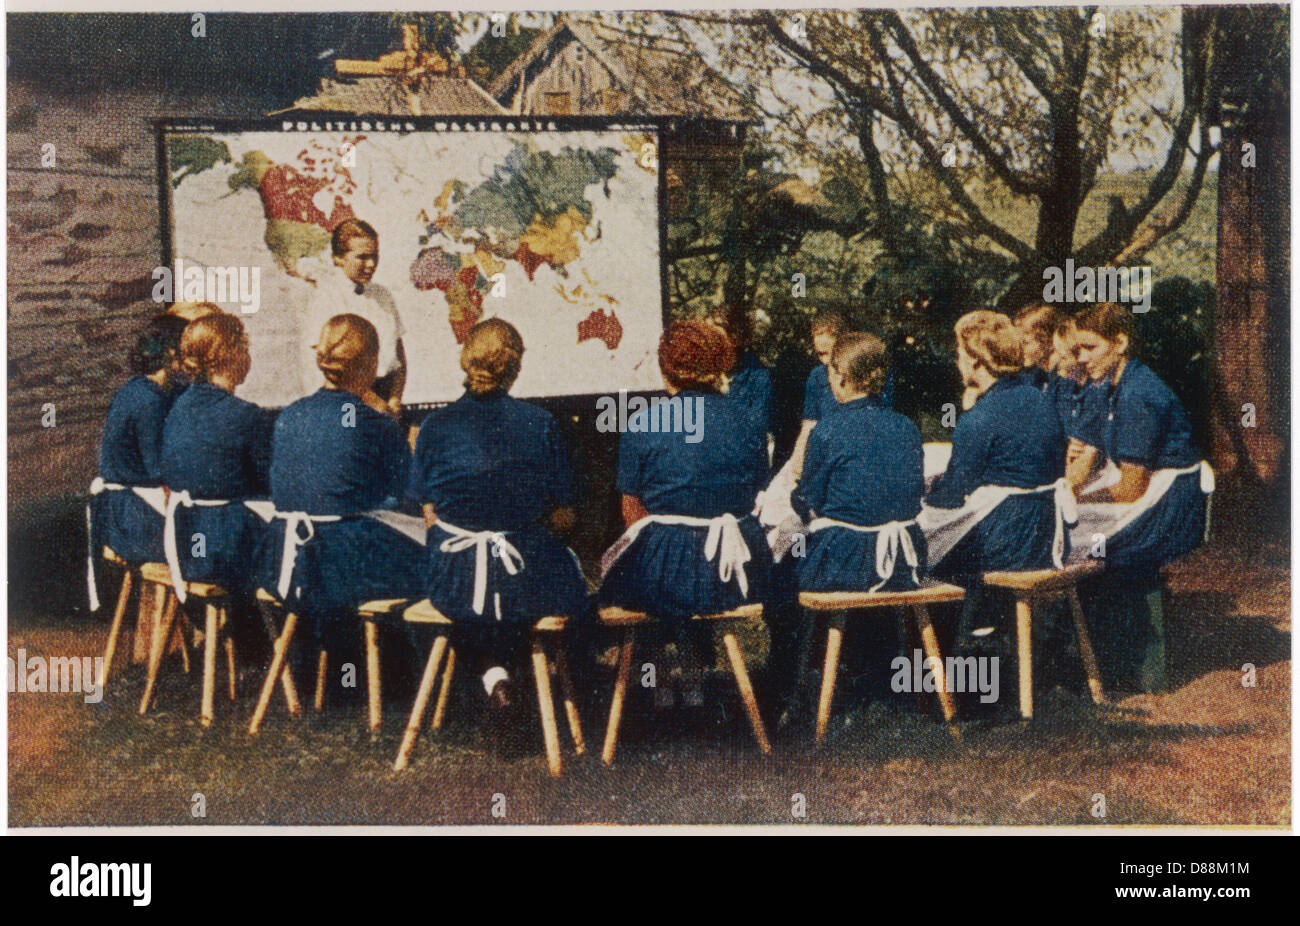 Training Girls In Nazism Stock Photo